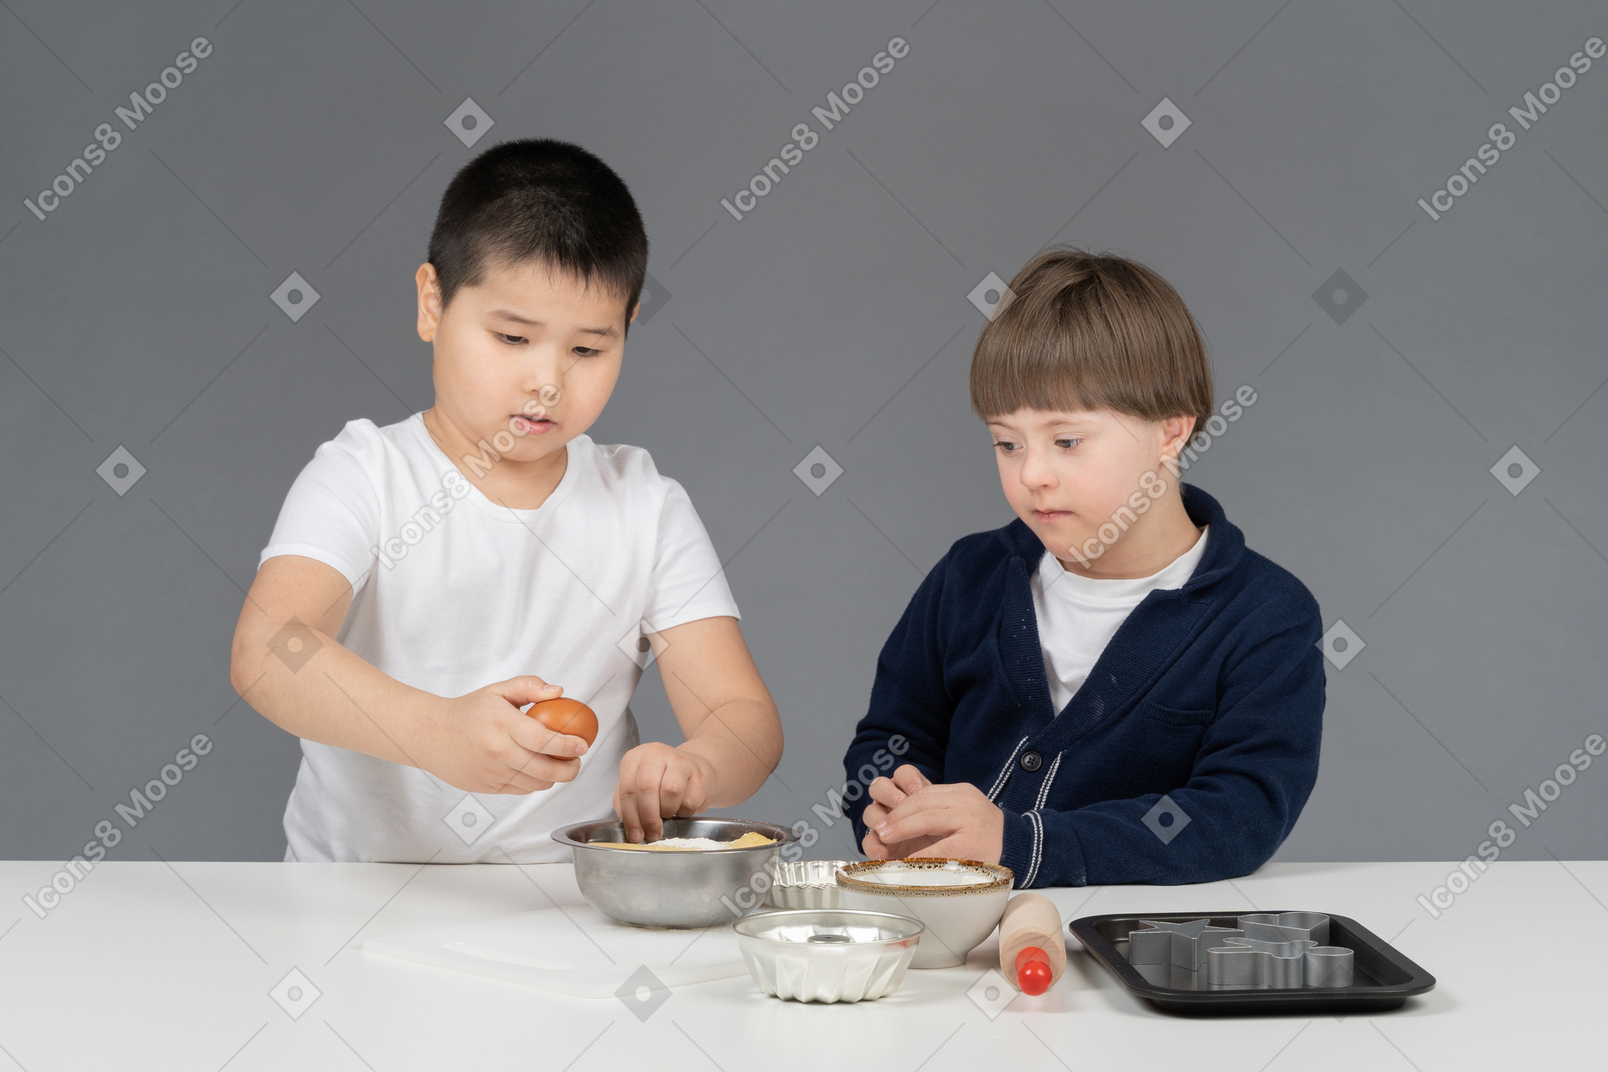 Dos niños pequeños practicando en hornear